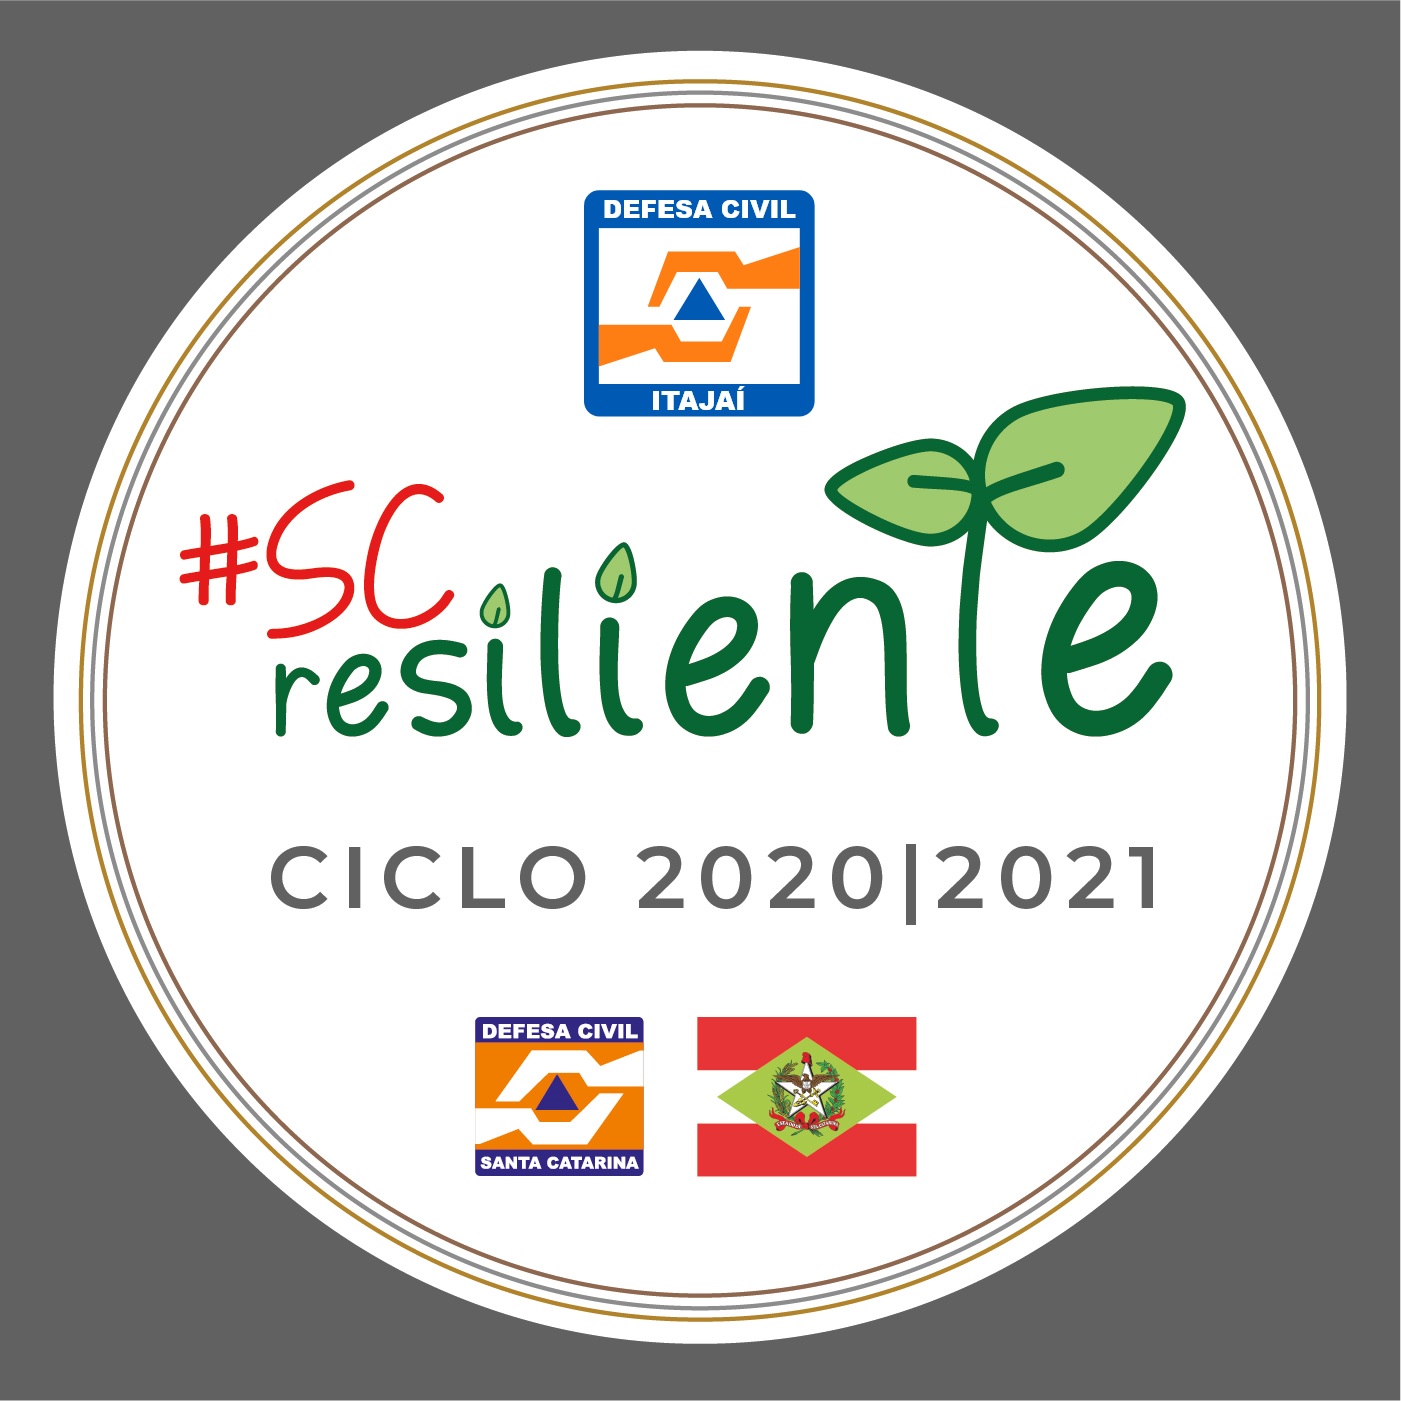 O Programa SC Resiliente premiou os municípios que foram destaque